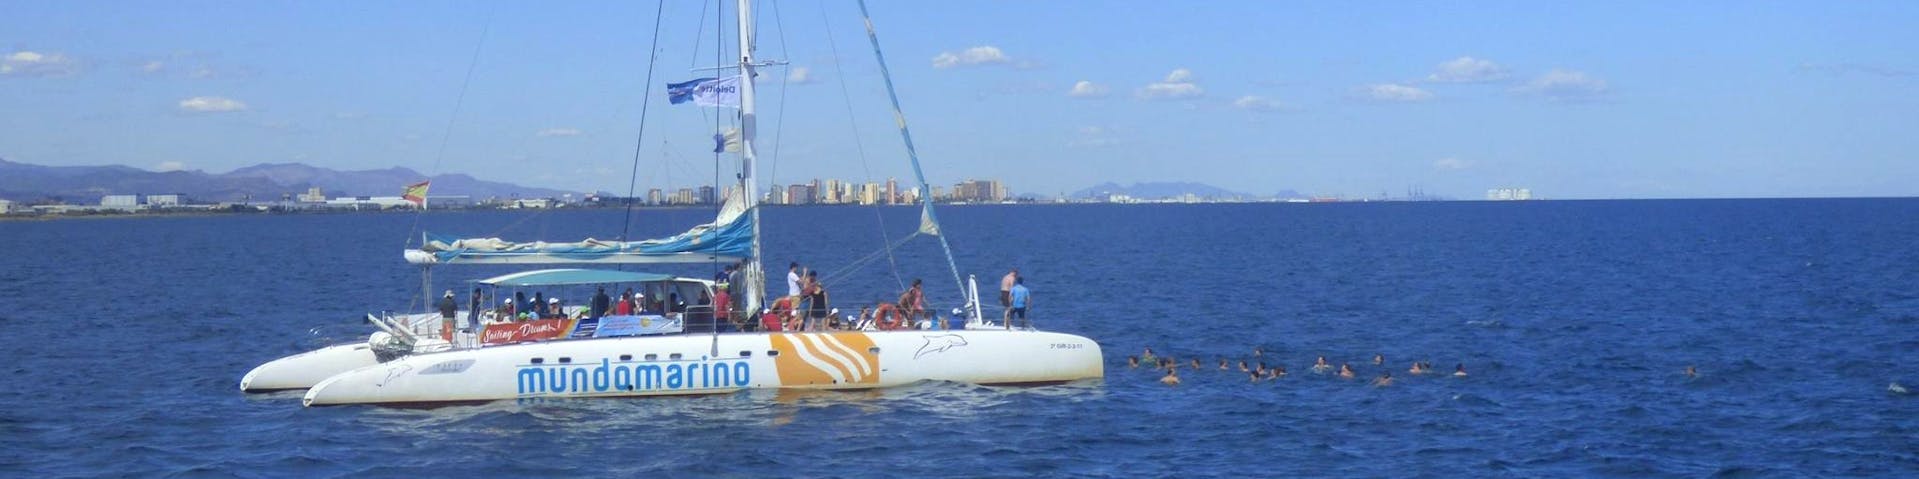 Our sailing catamaran during a Full Day Catamaran Trip from Jávea with BBQ with Mundo Marino.